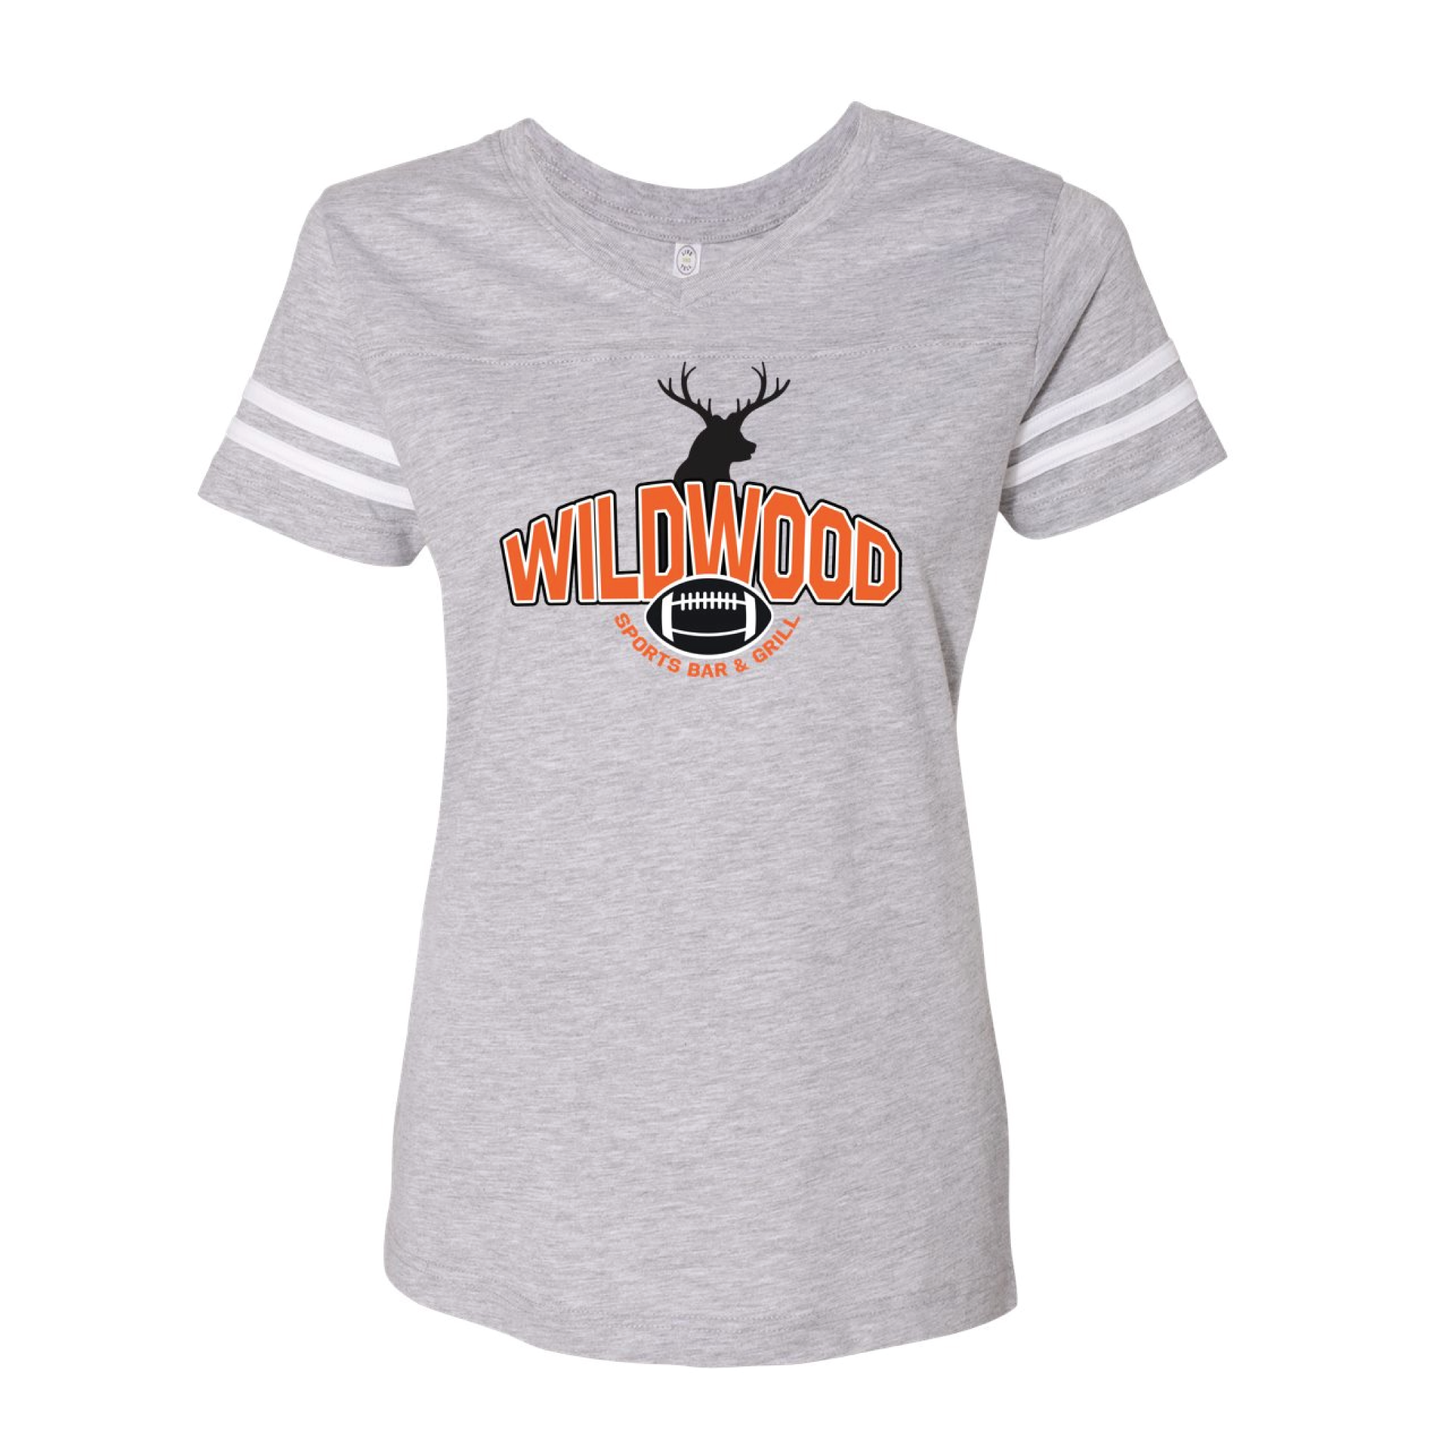 Wildwood Women's V-Neck Football Jersey Tee